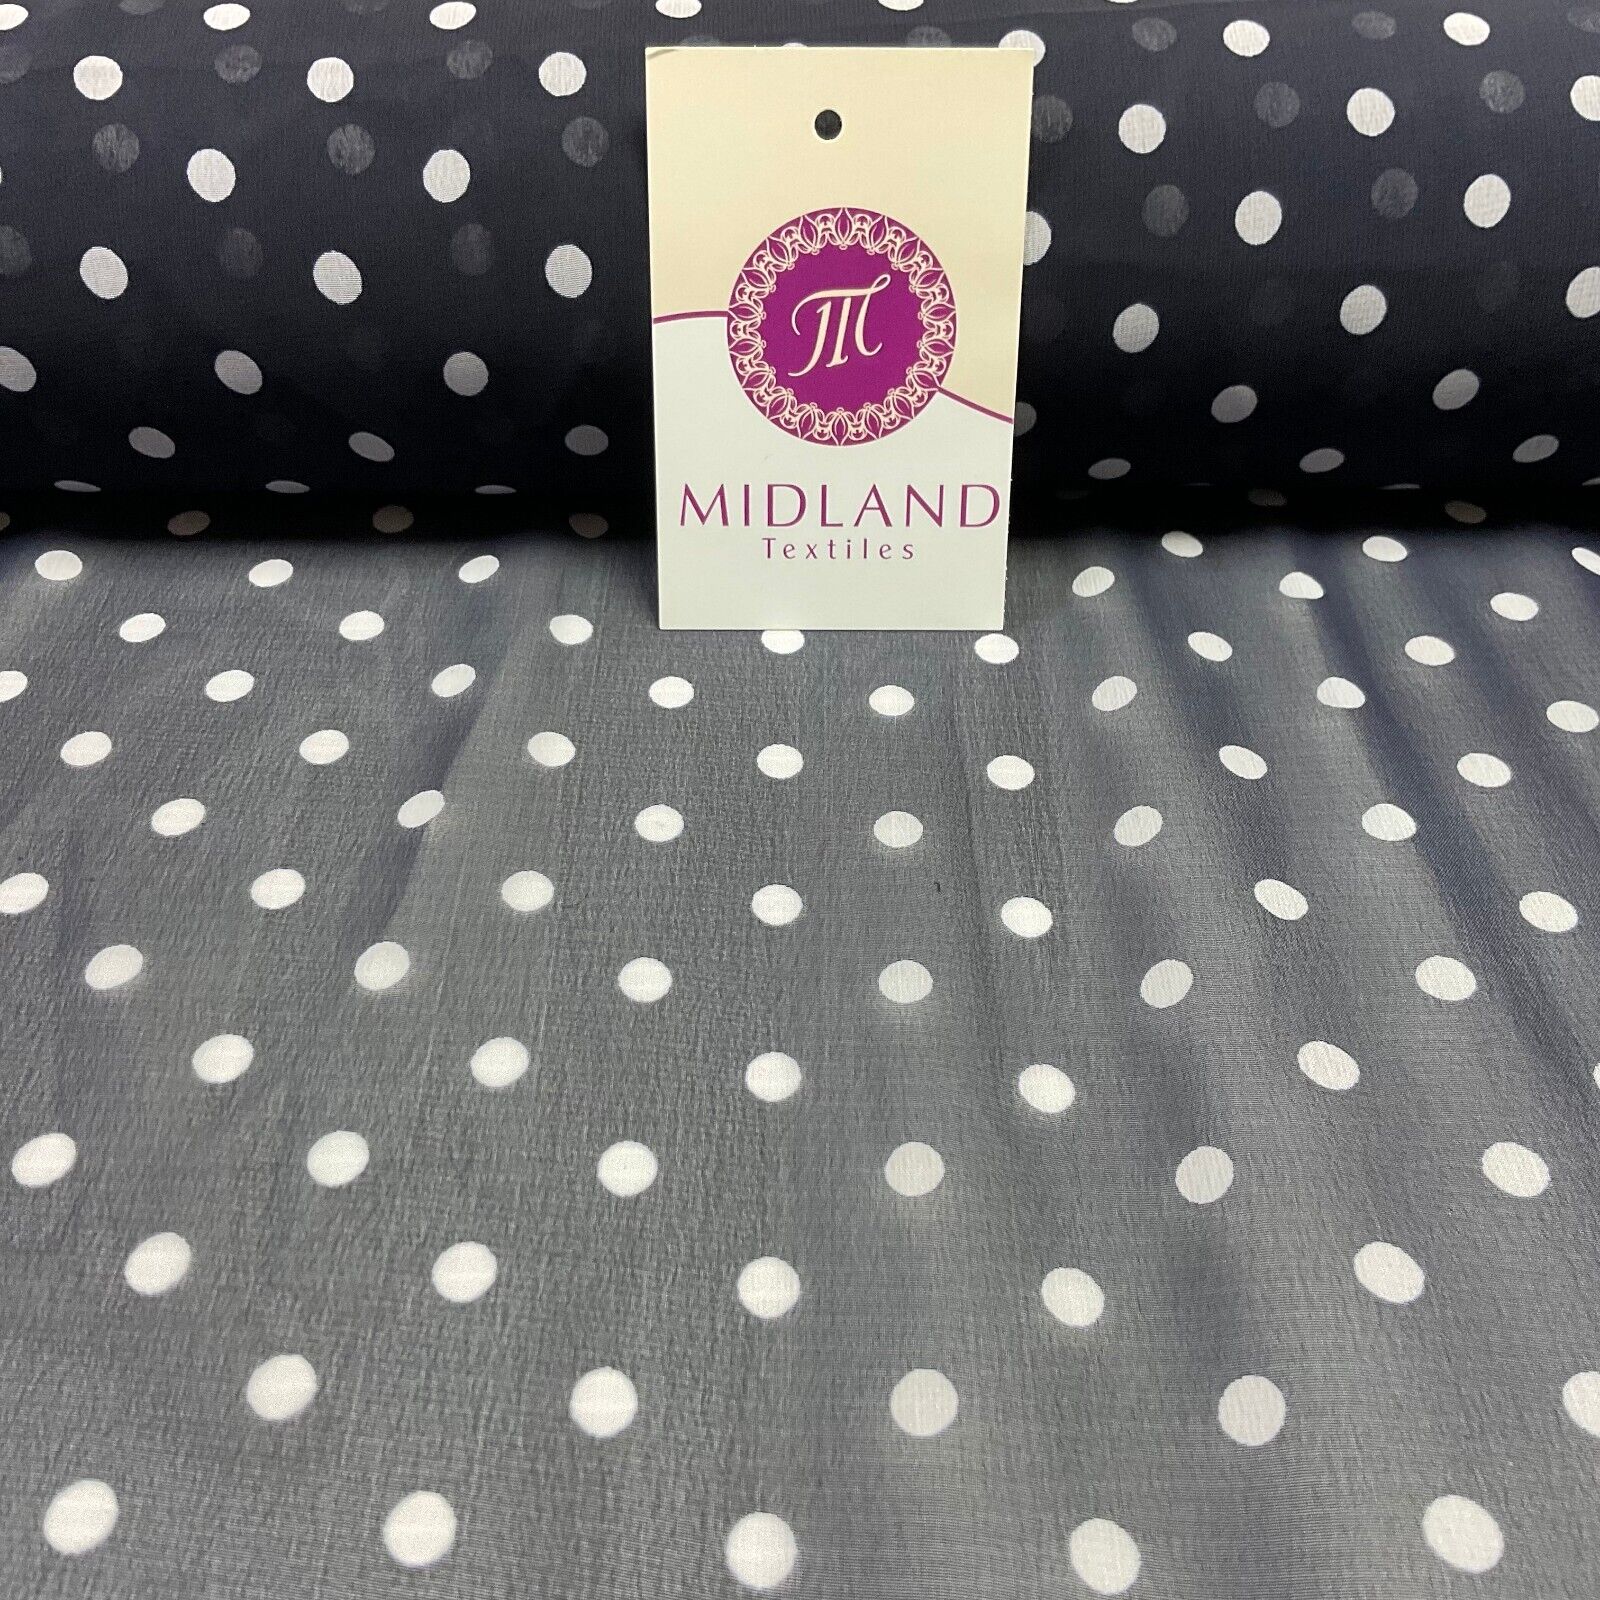 Polka Dot Spot Sheer, Flowy dress blouse chiffon fabric 58 inches wide M1748